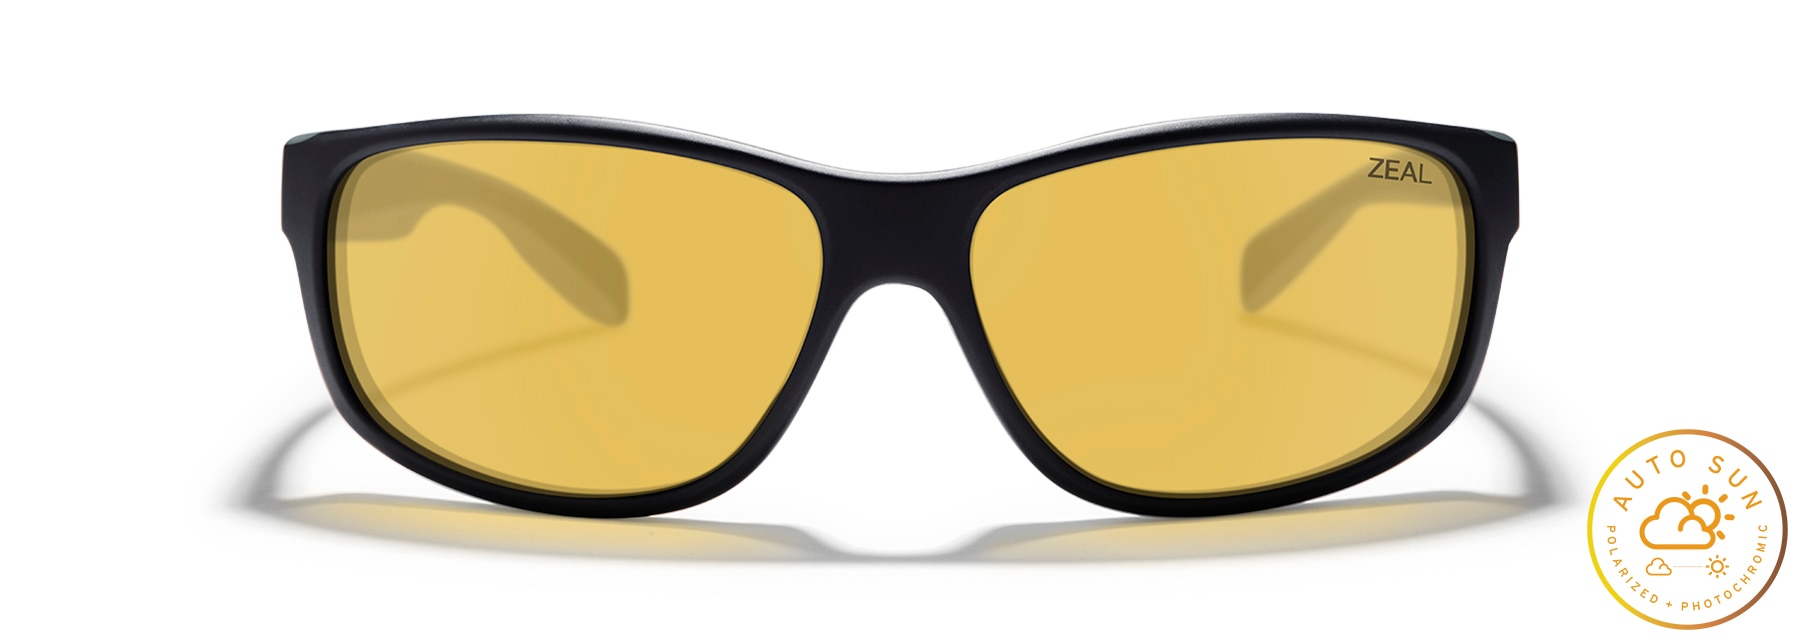 Shop SABLE (Z1436) Sunglasses by Zeal | Zeal Optics